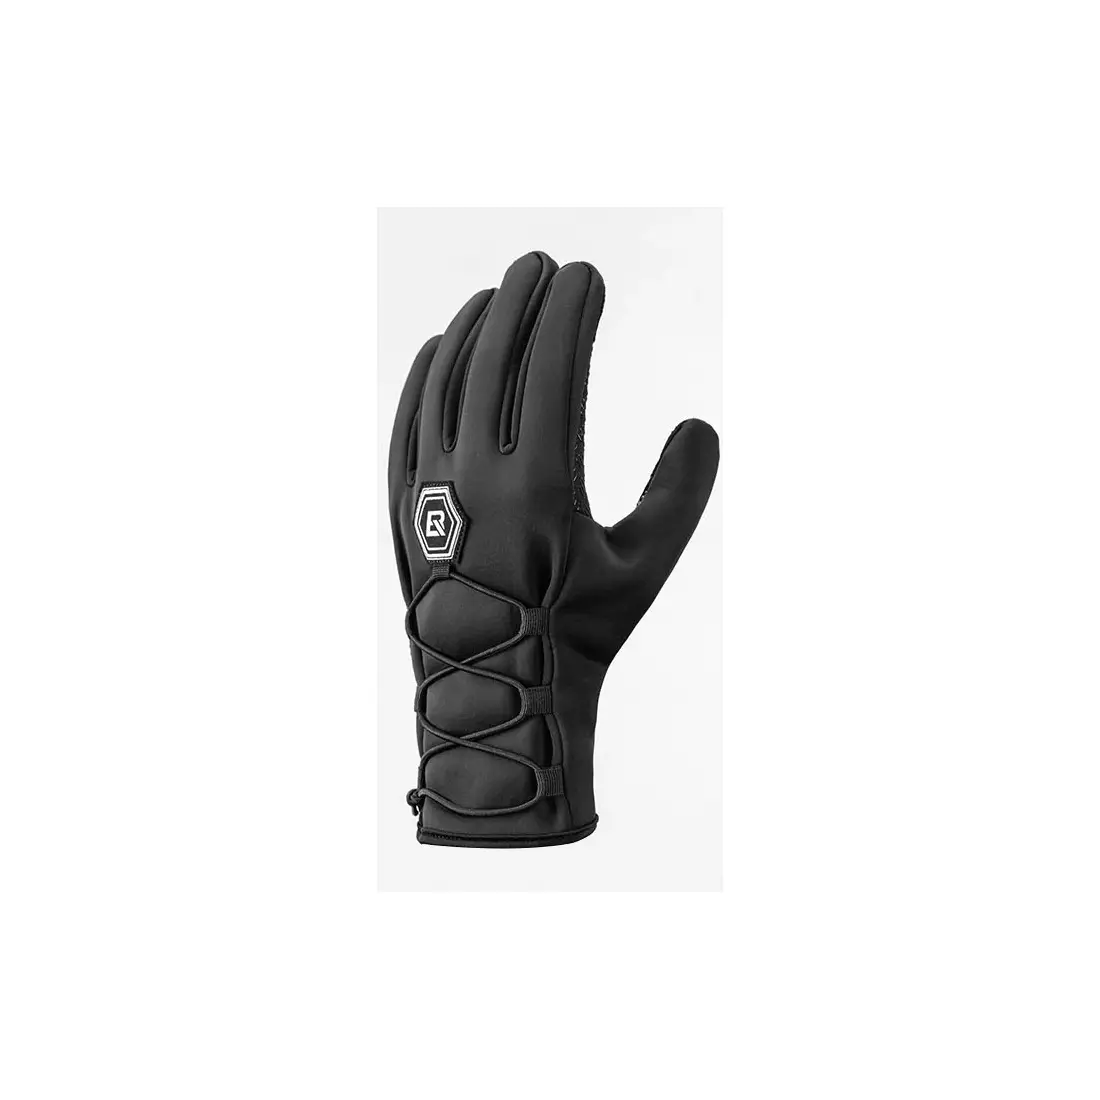 Rockbros winter softshell bicycle gloves black S077-6BK